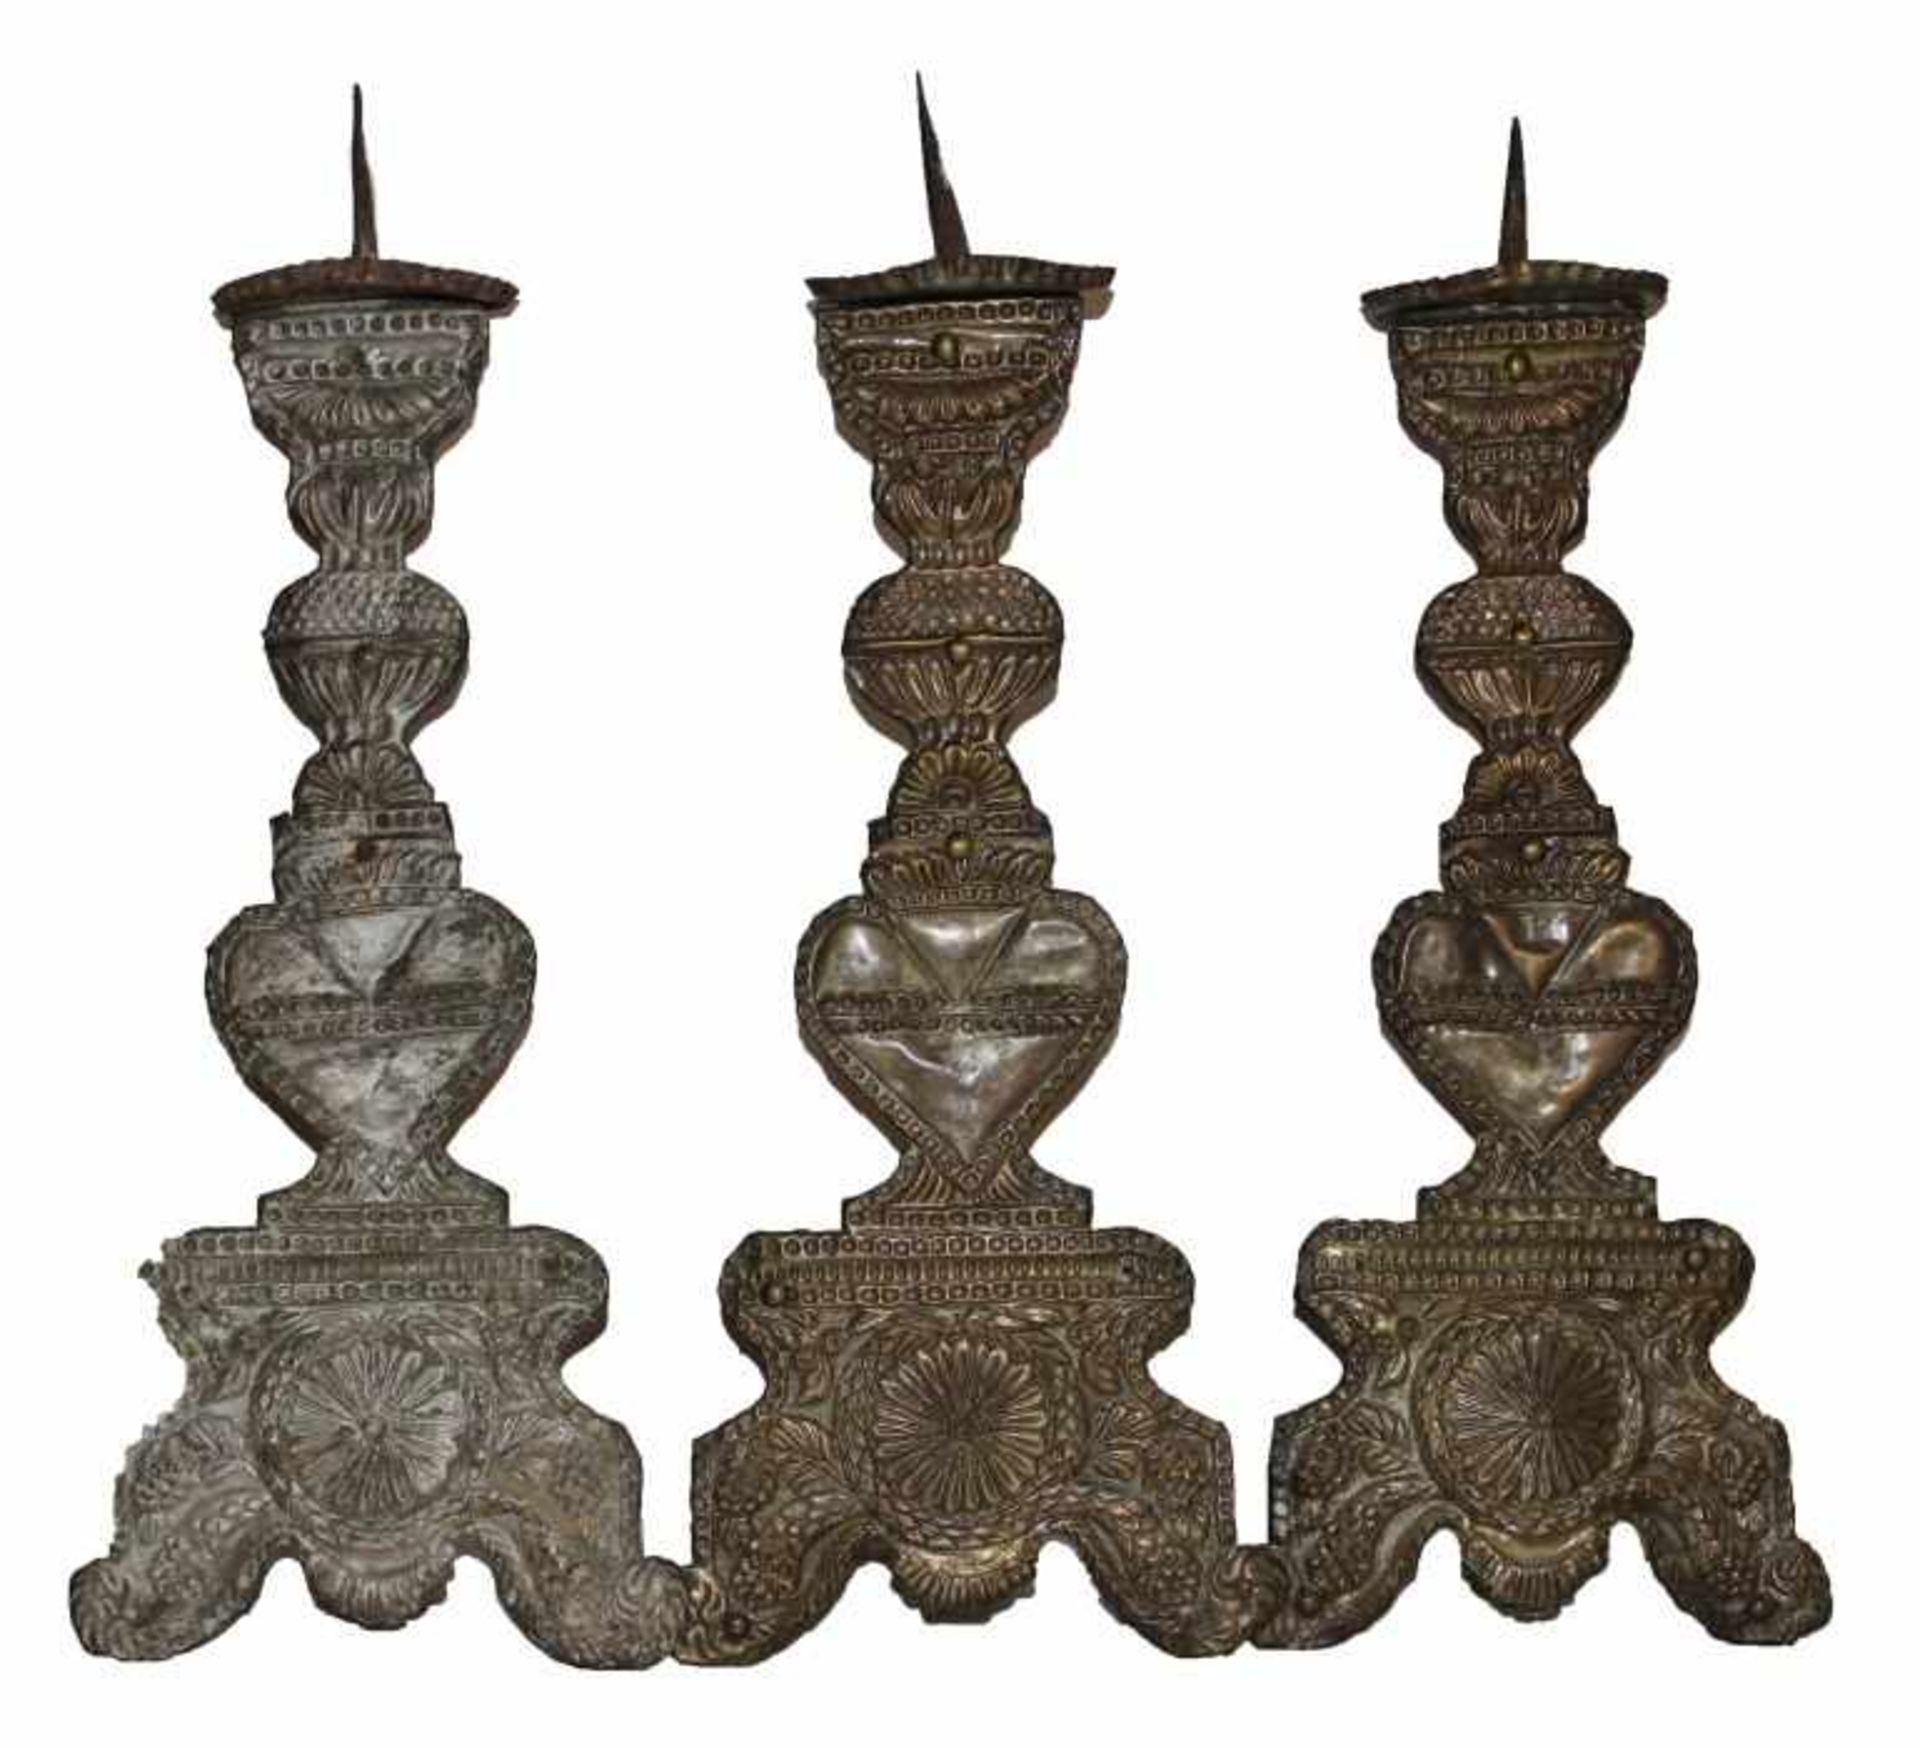 Drei Kerzenleuchter - wohl deutsch um 1800 Messingblech versilbert, reich verziert mit Herz und